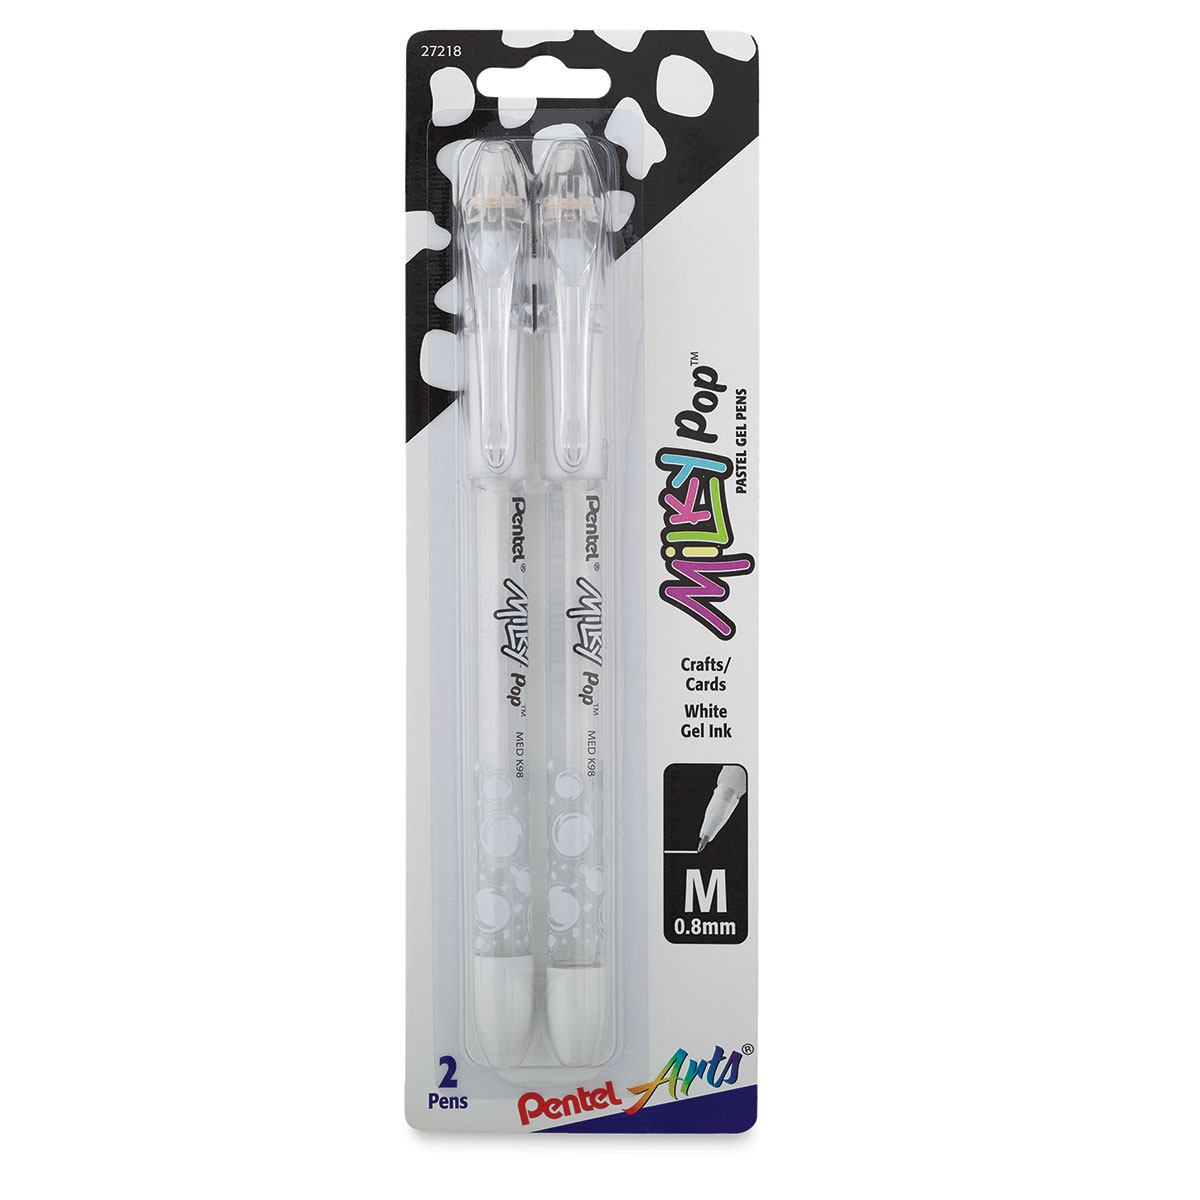 Make It Pop With Color With Pentel's POP Gel Pens + Gel Pen Prize